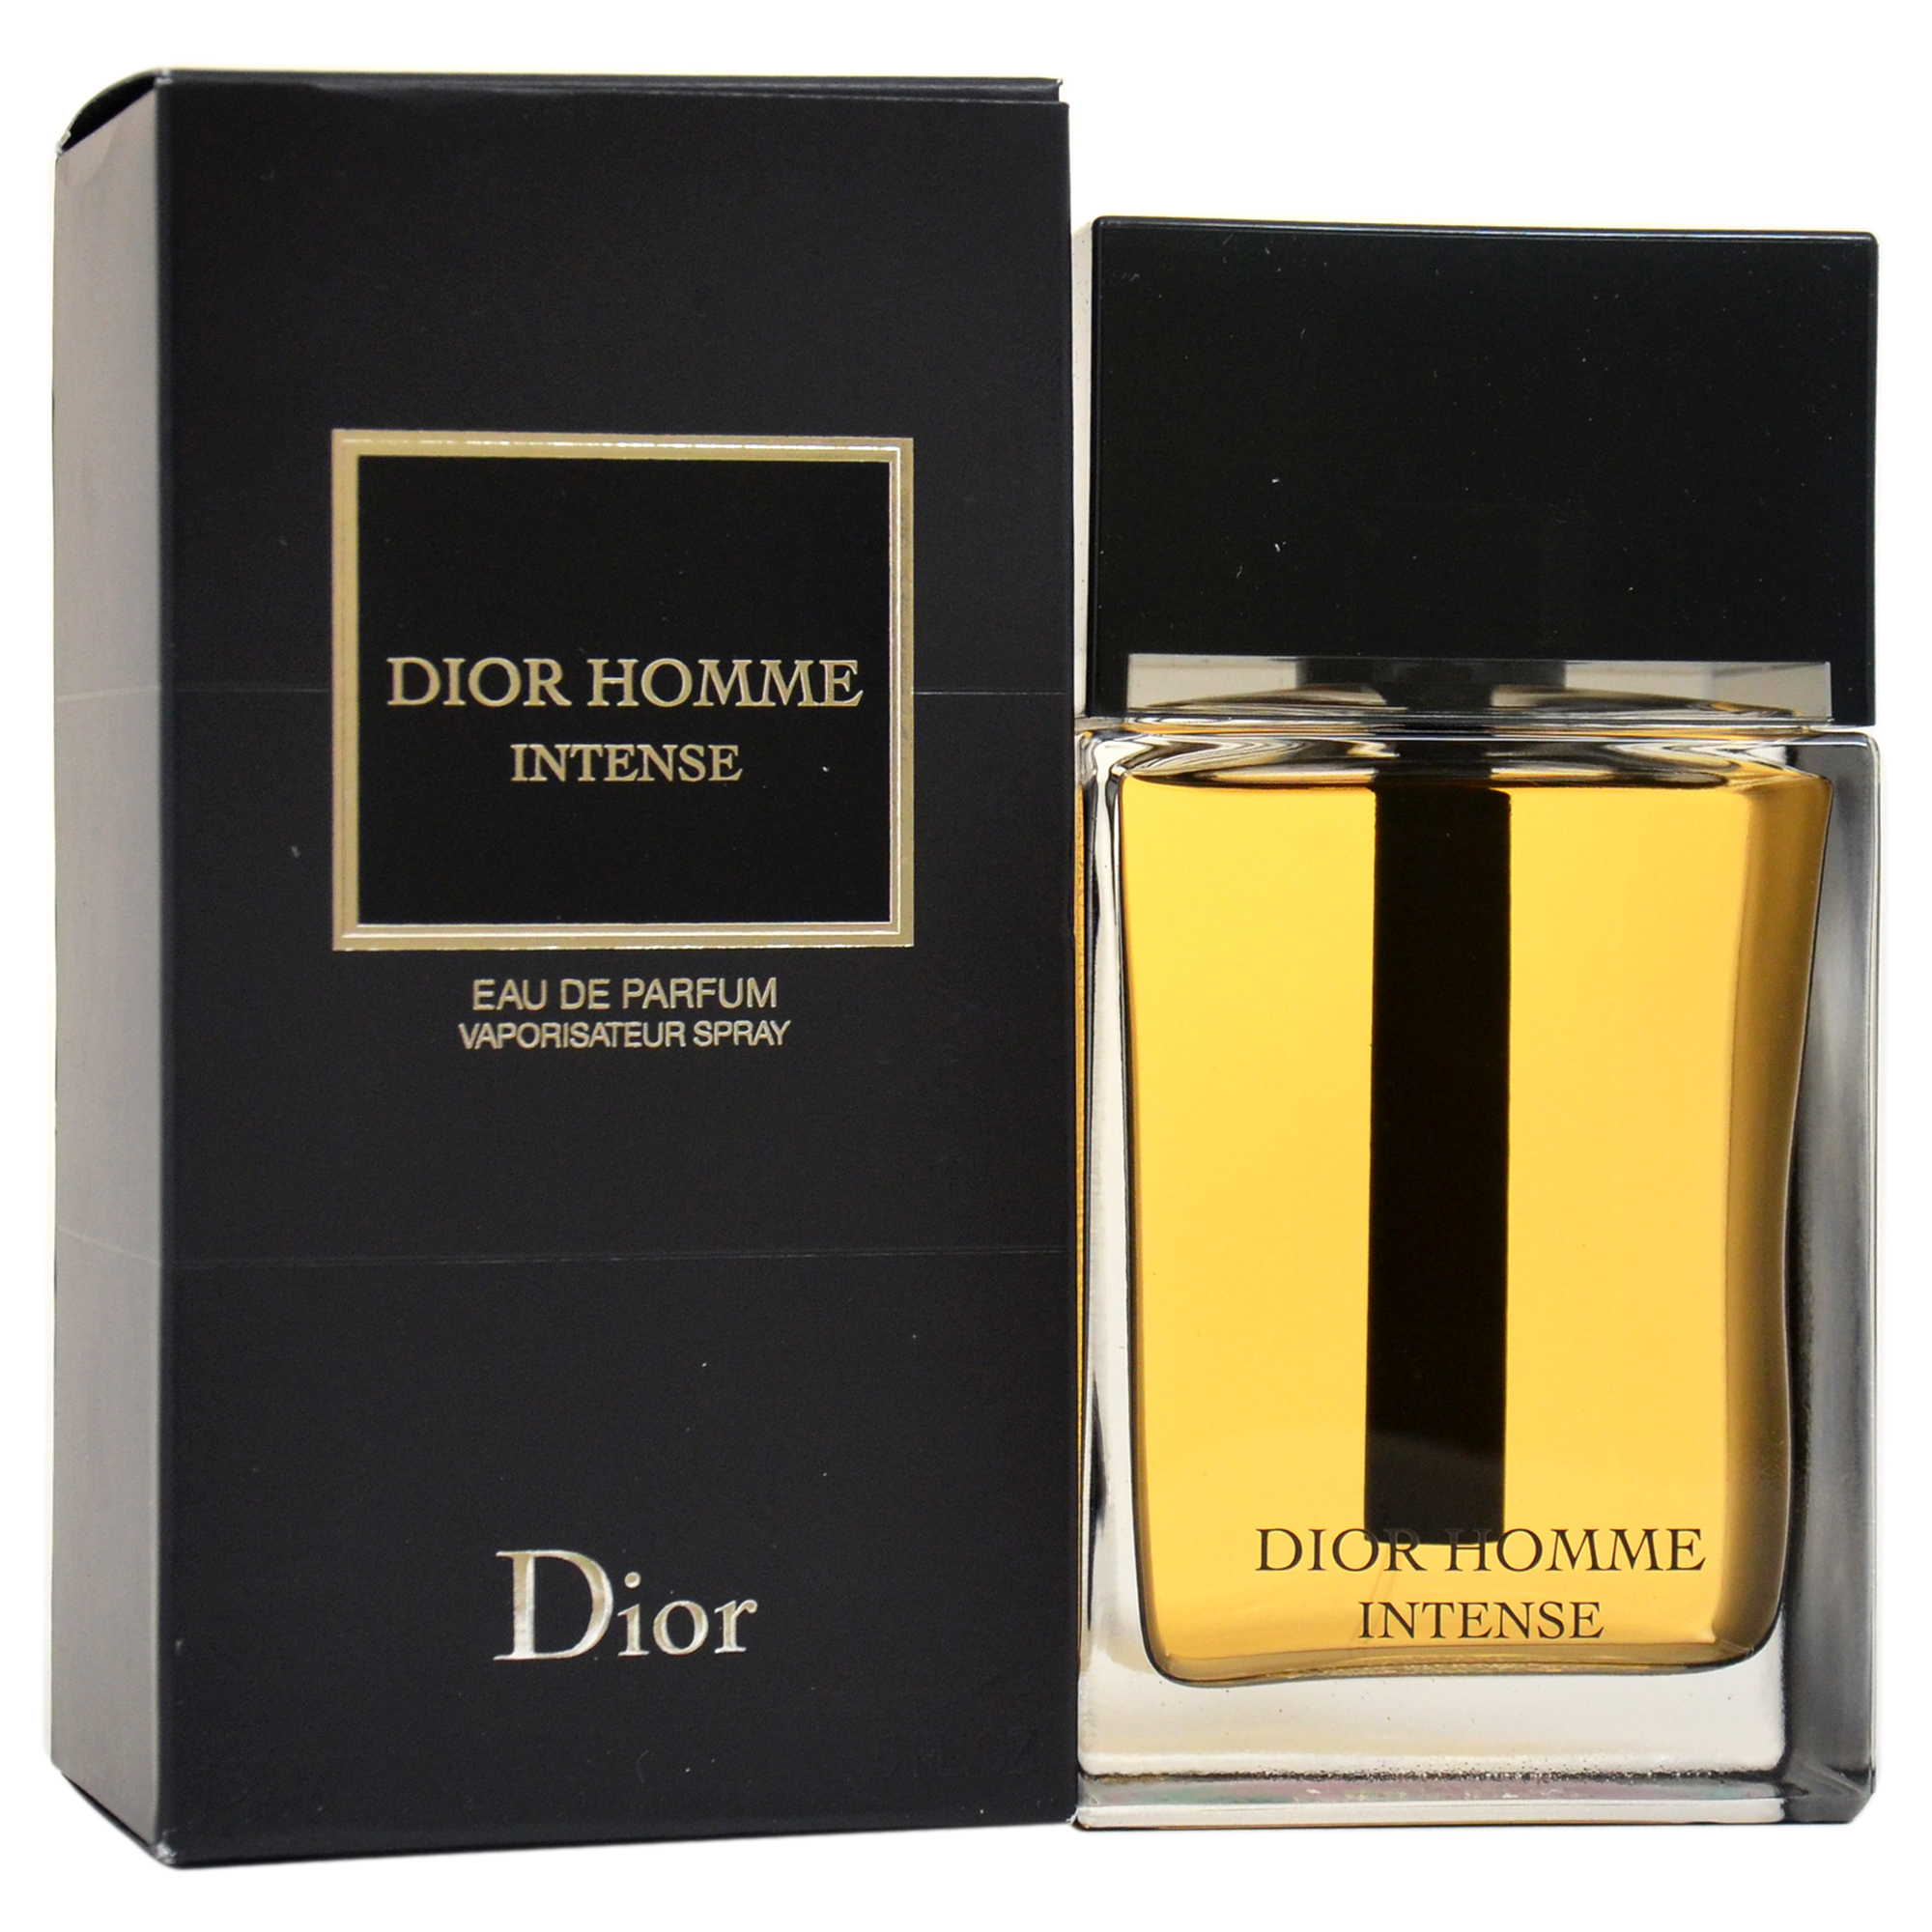 DIOR HOMME INTENSE by Christian Dior for Men - 5 oz EDP Spray